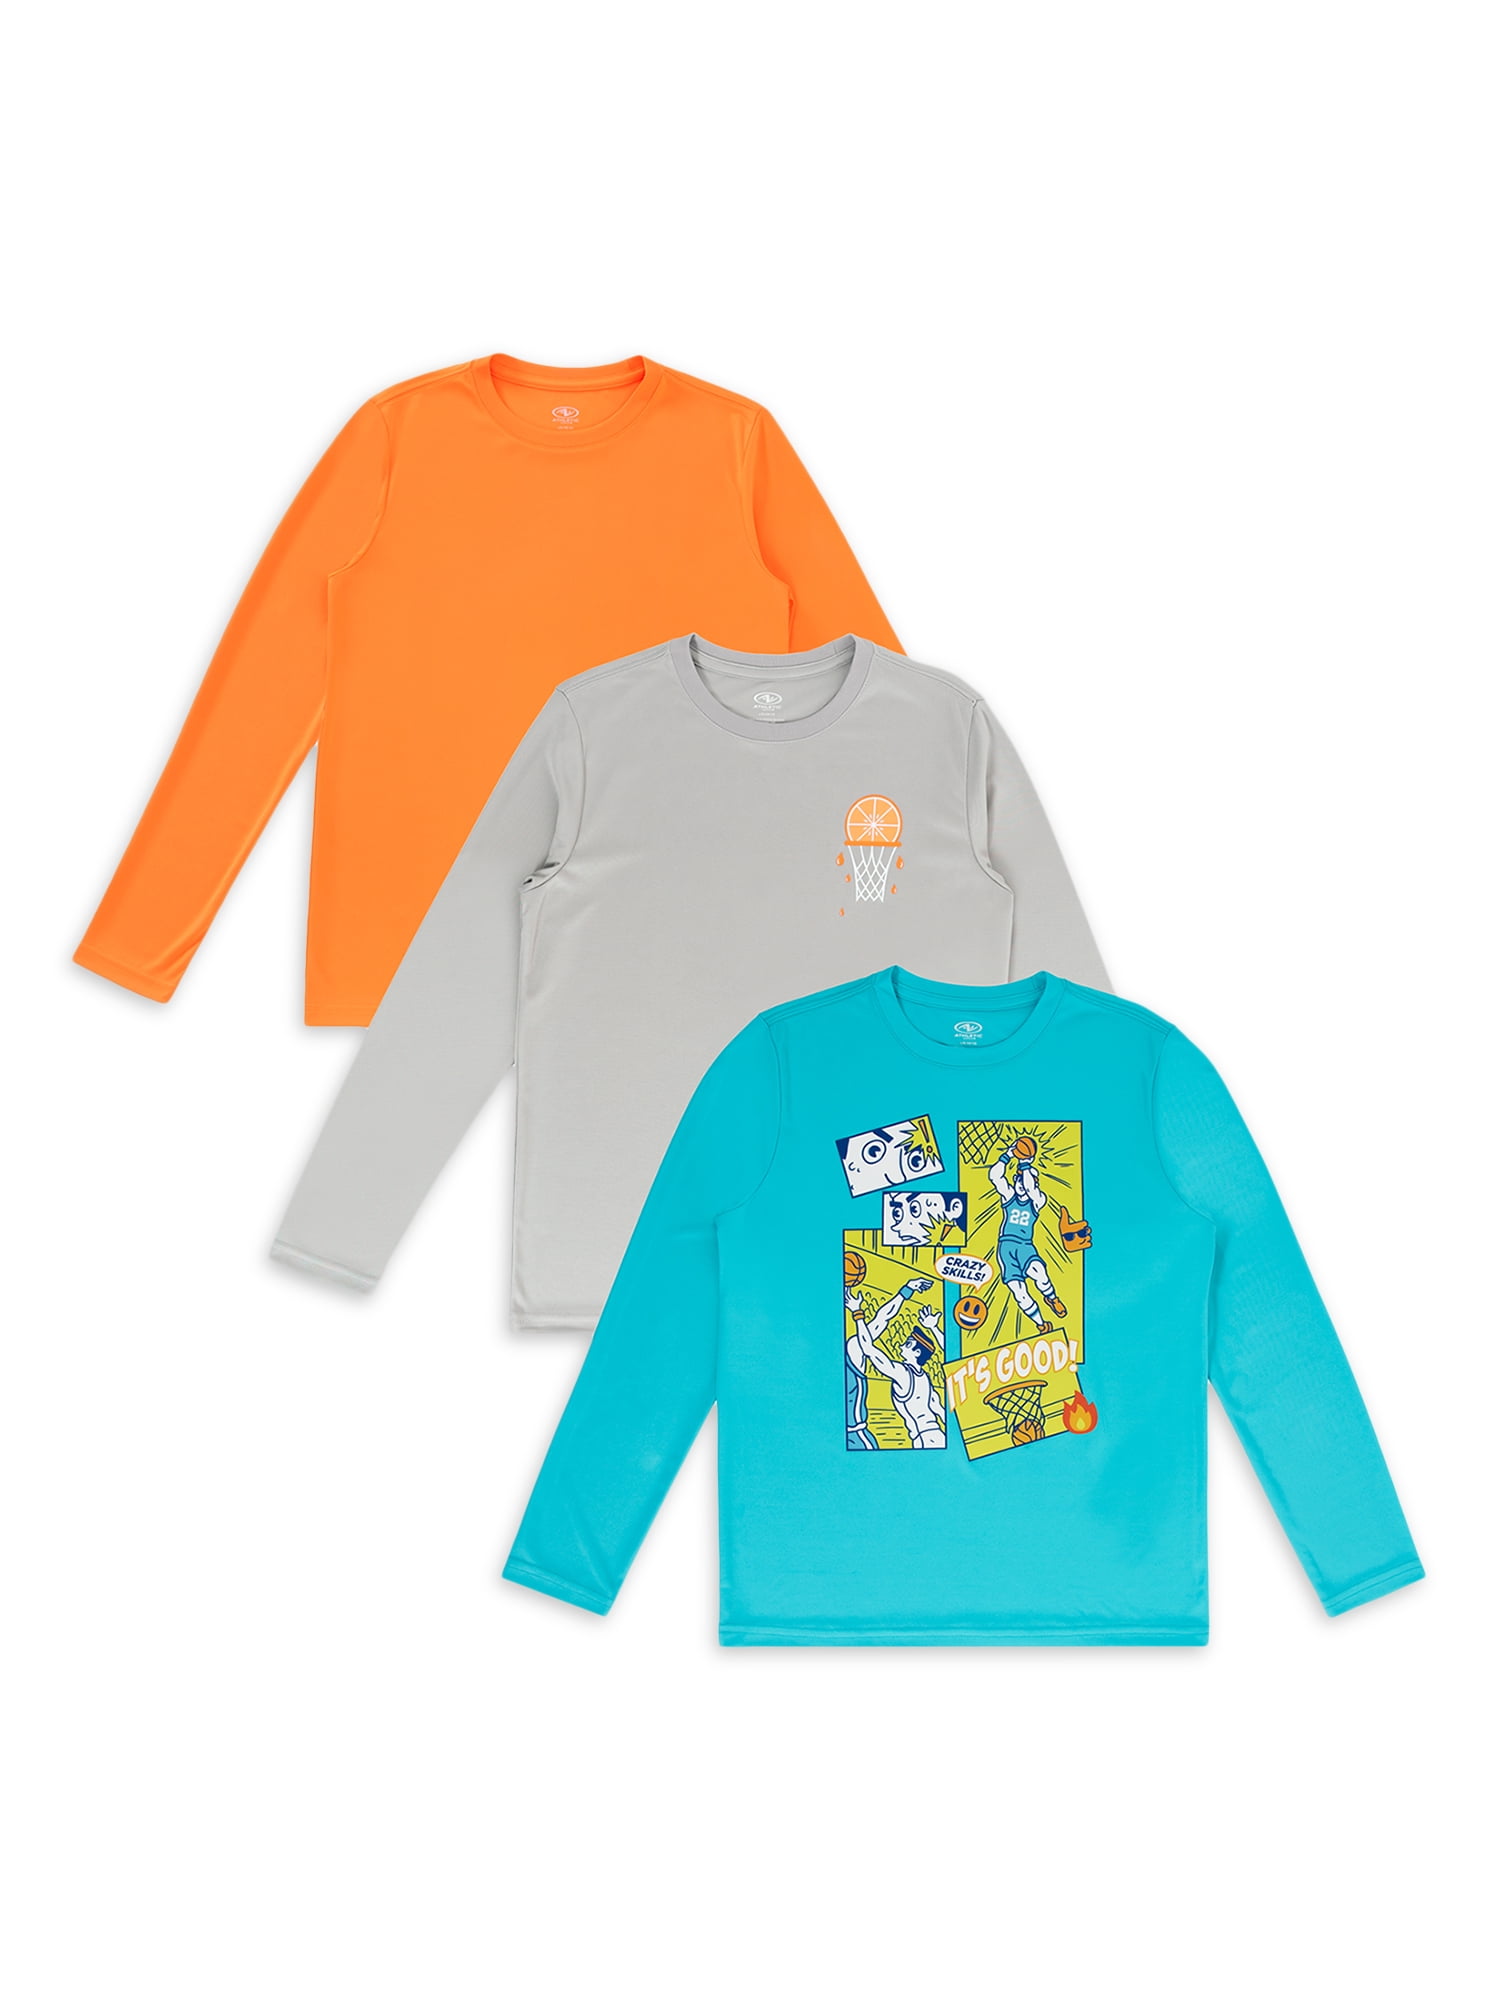 Athletic Works Boys Graphic 3-Pack Shirts, Sizes 4-18 & Husky - Walmart.com